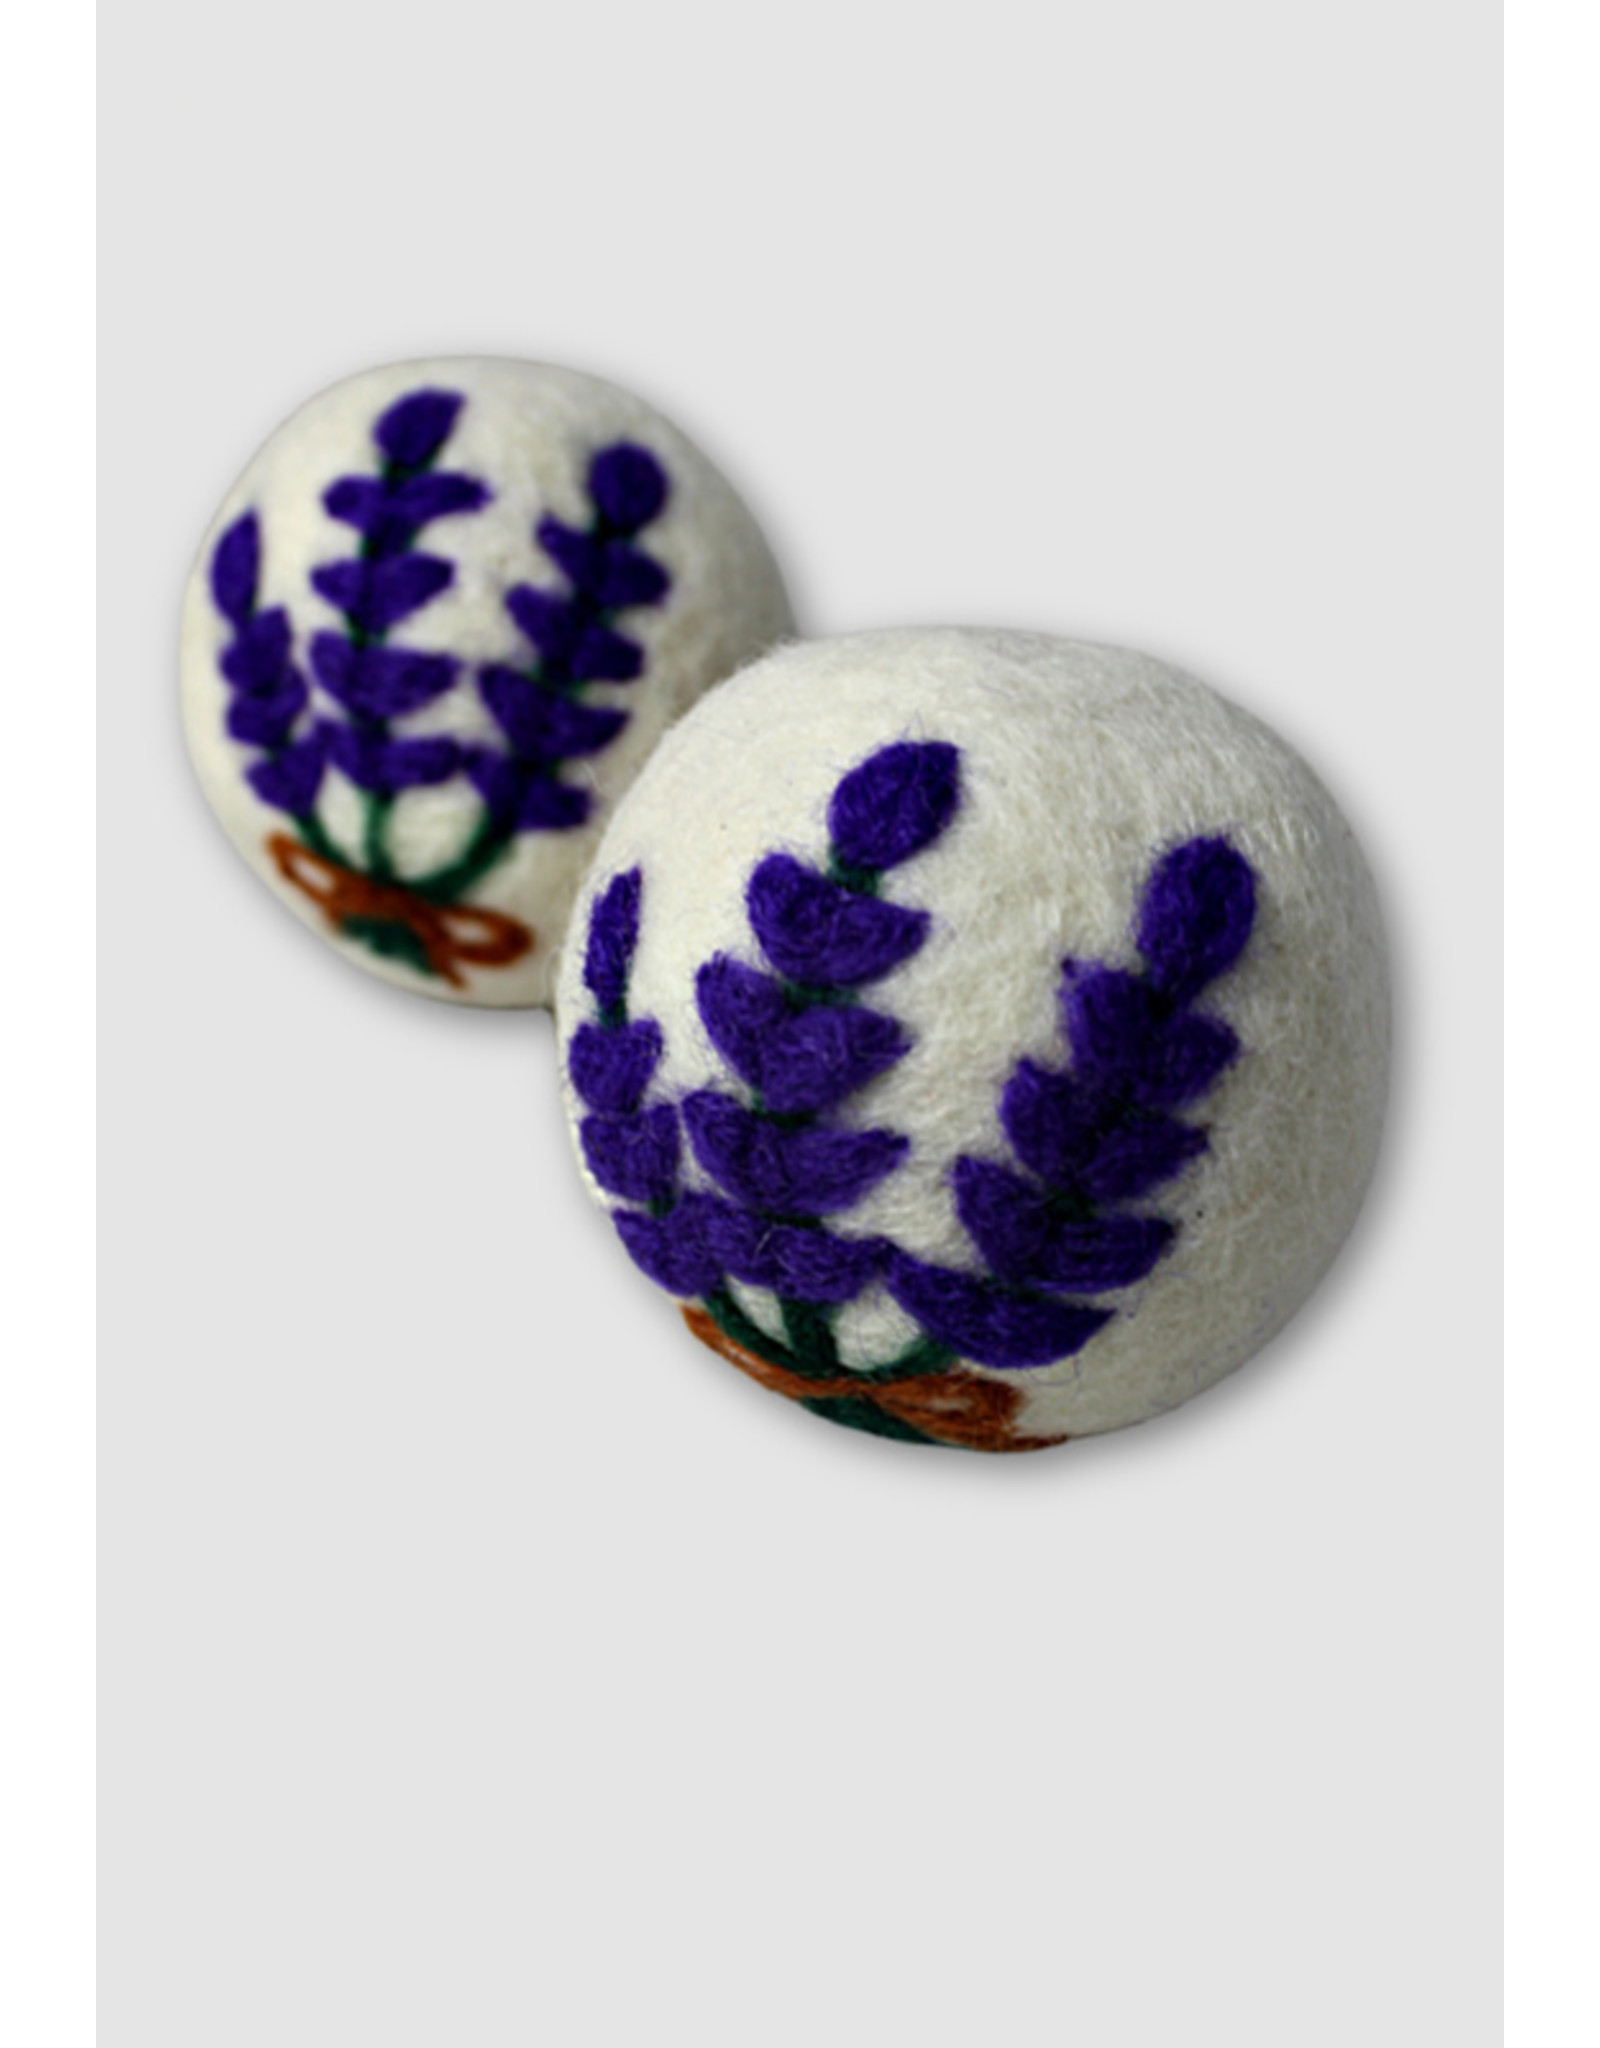 Nepal Wool Felt Dryer Ball (single w/assorted embroidery), Nepal